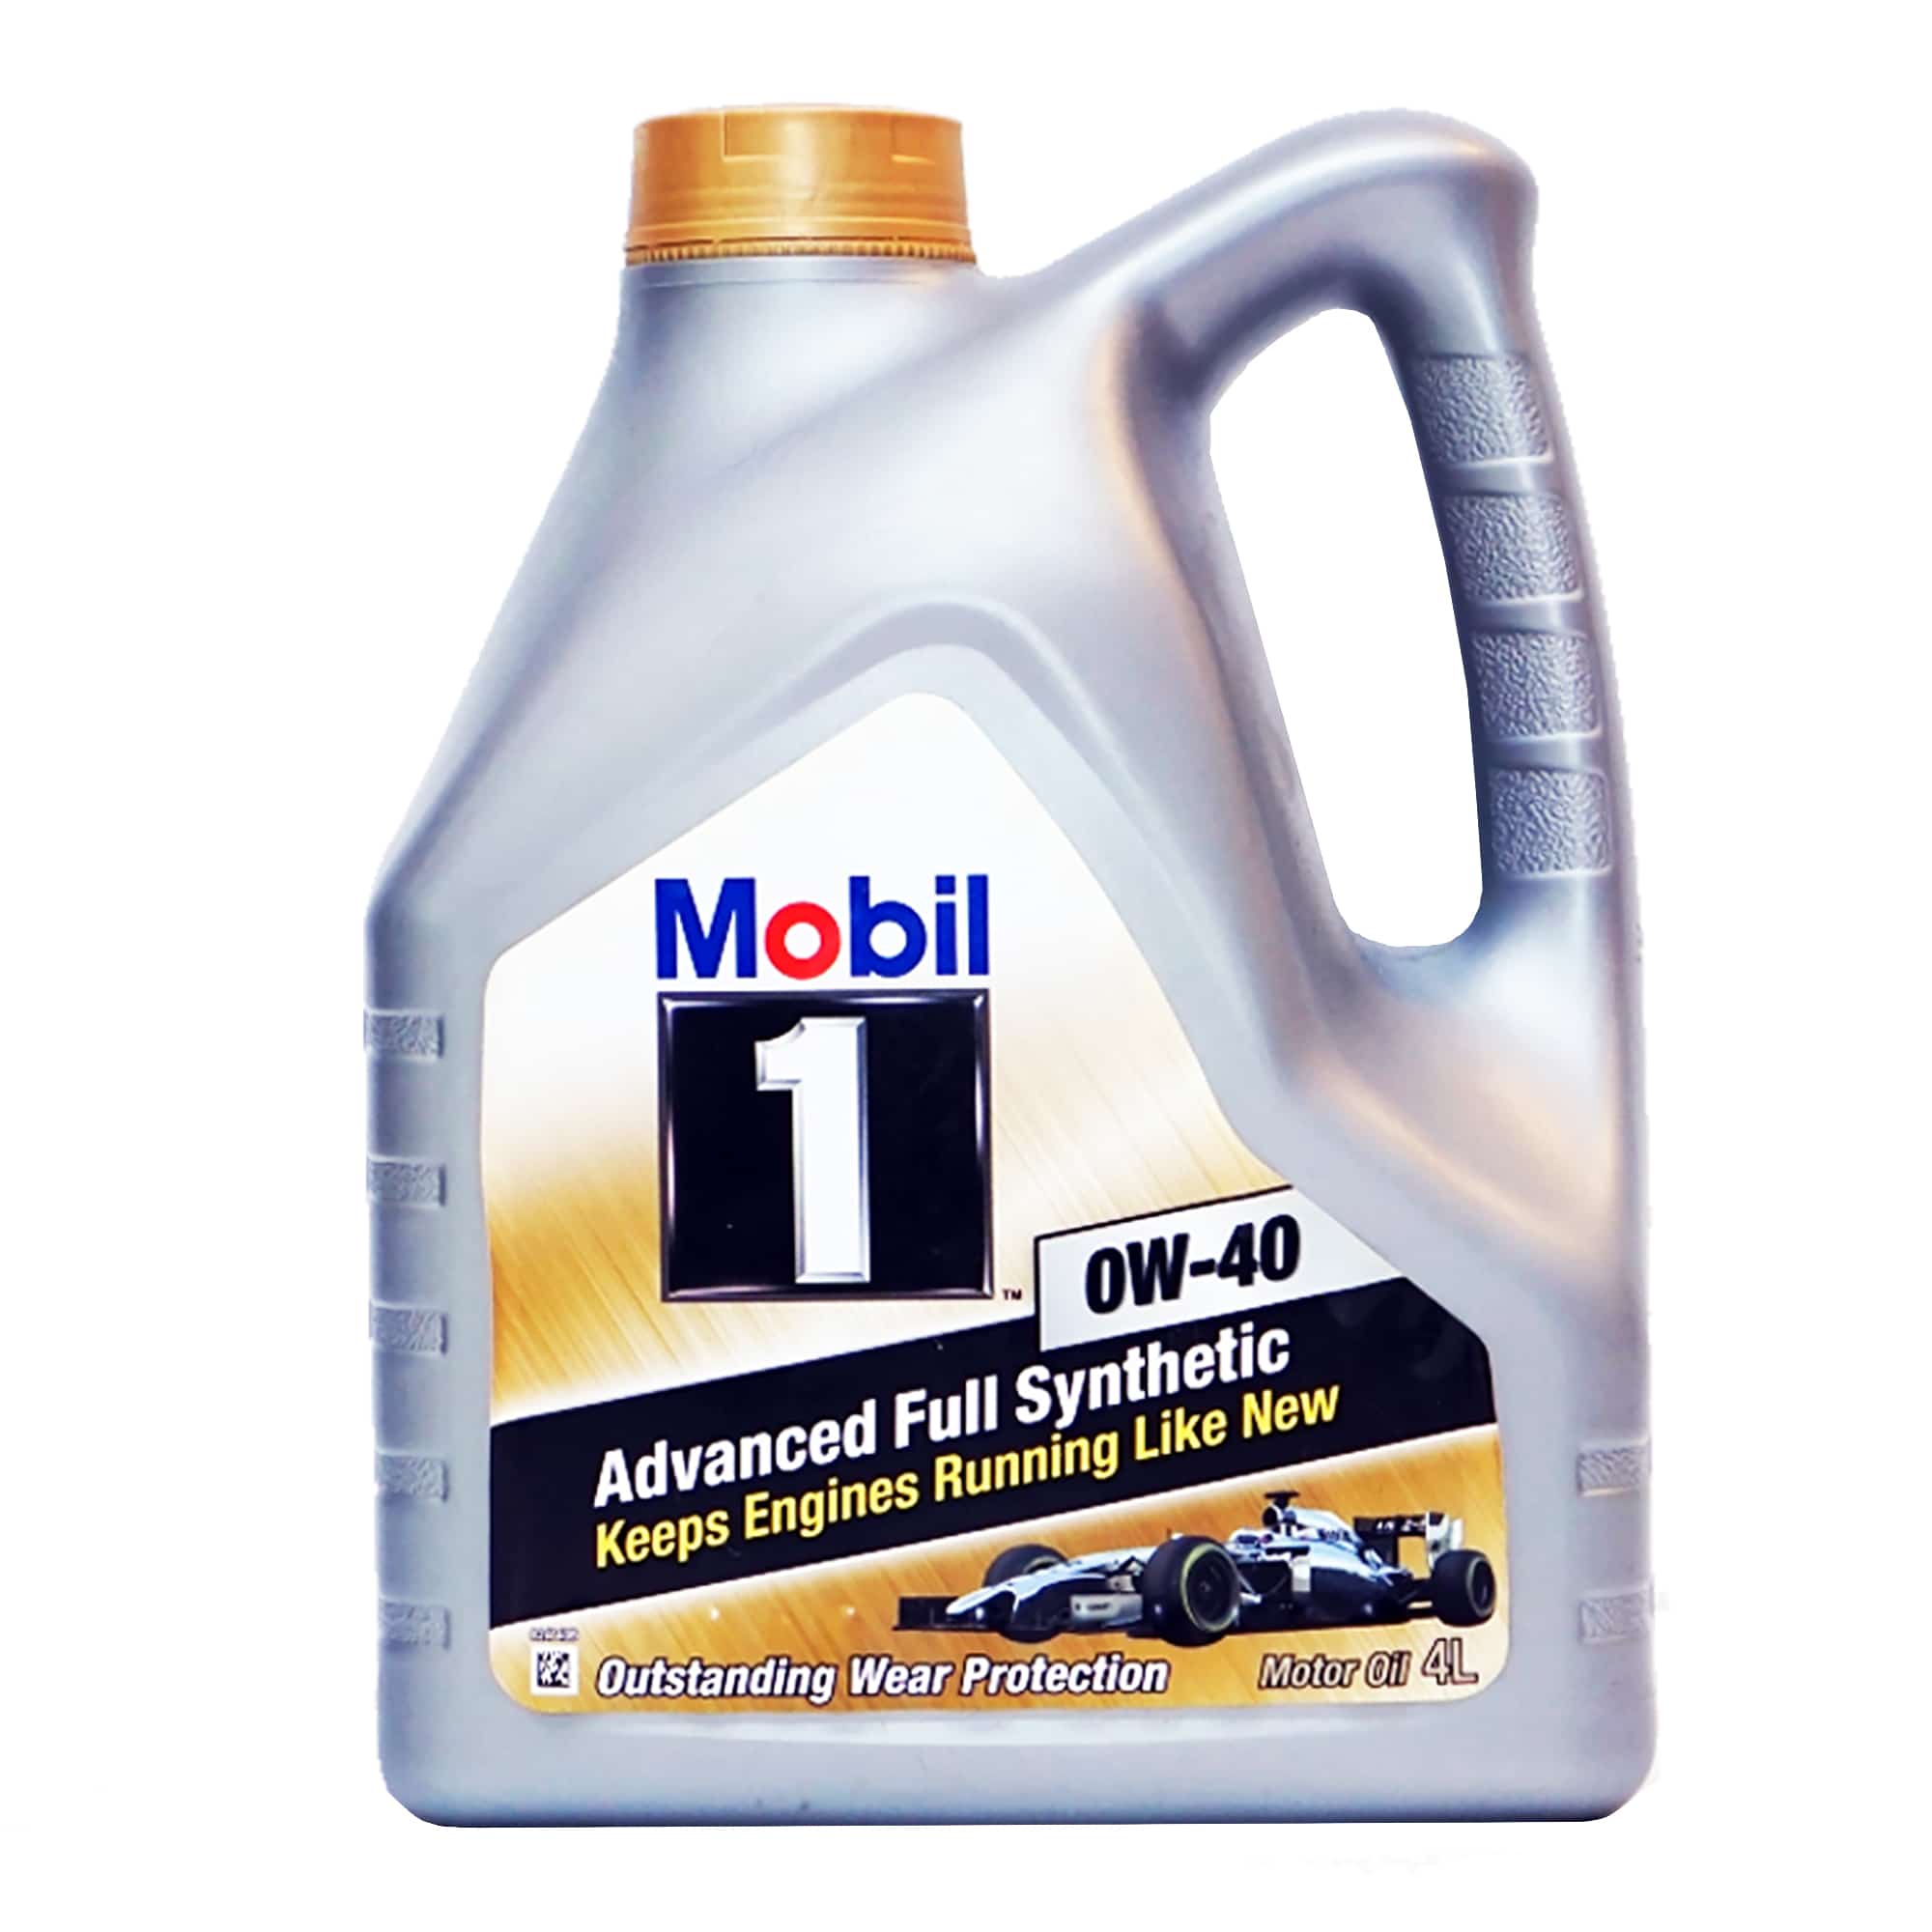 Моторное масло Mobil 1 0W-40 4л